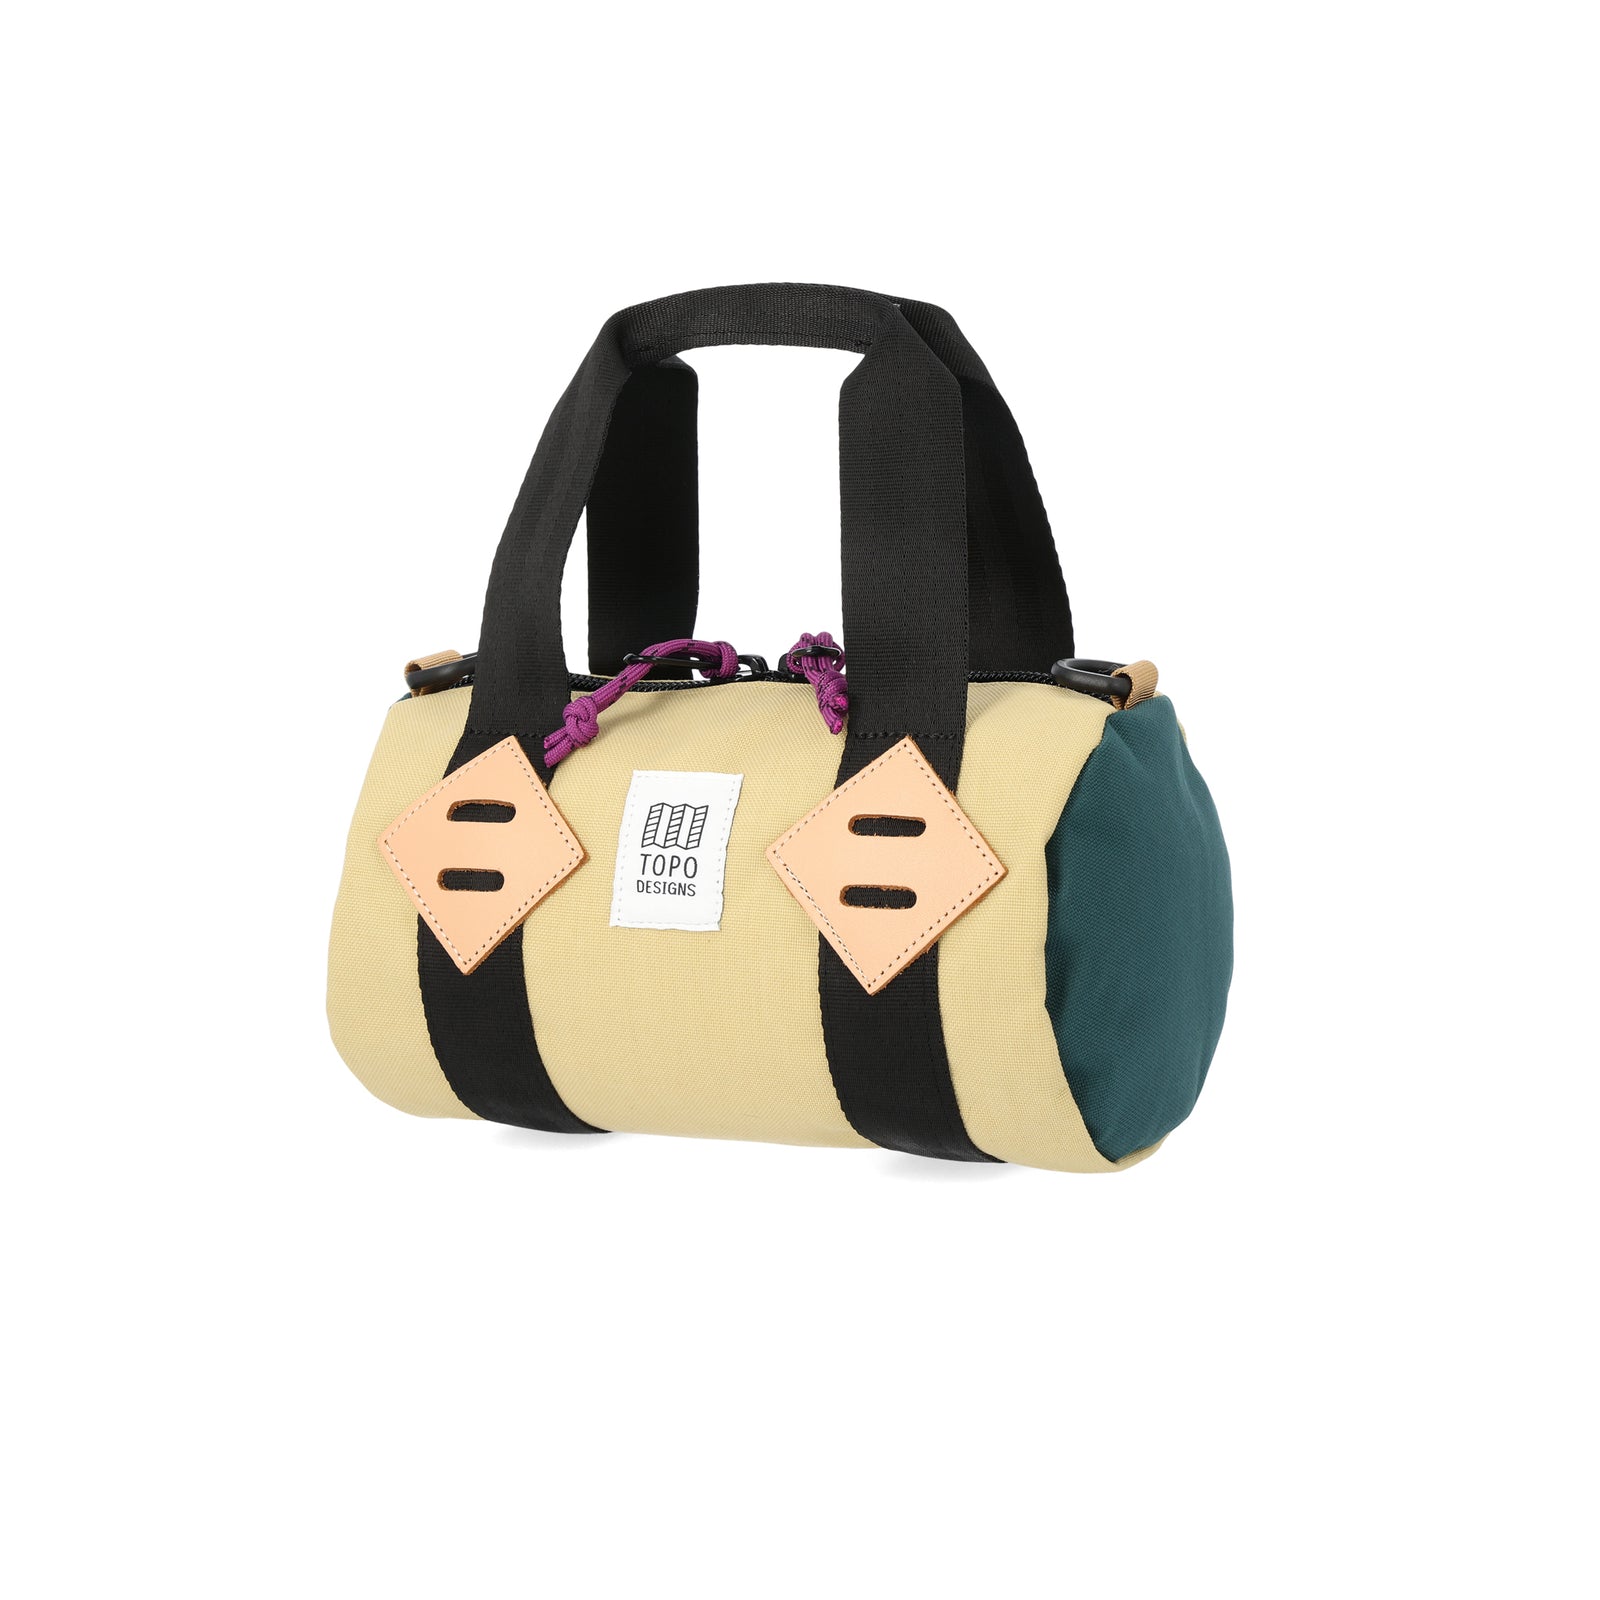 Topo Designs Mini Classic Duffel Bag shoulder crossbody purse in recycled "Hemp / Botanic Green" nylon.